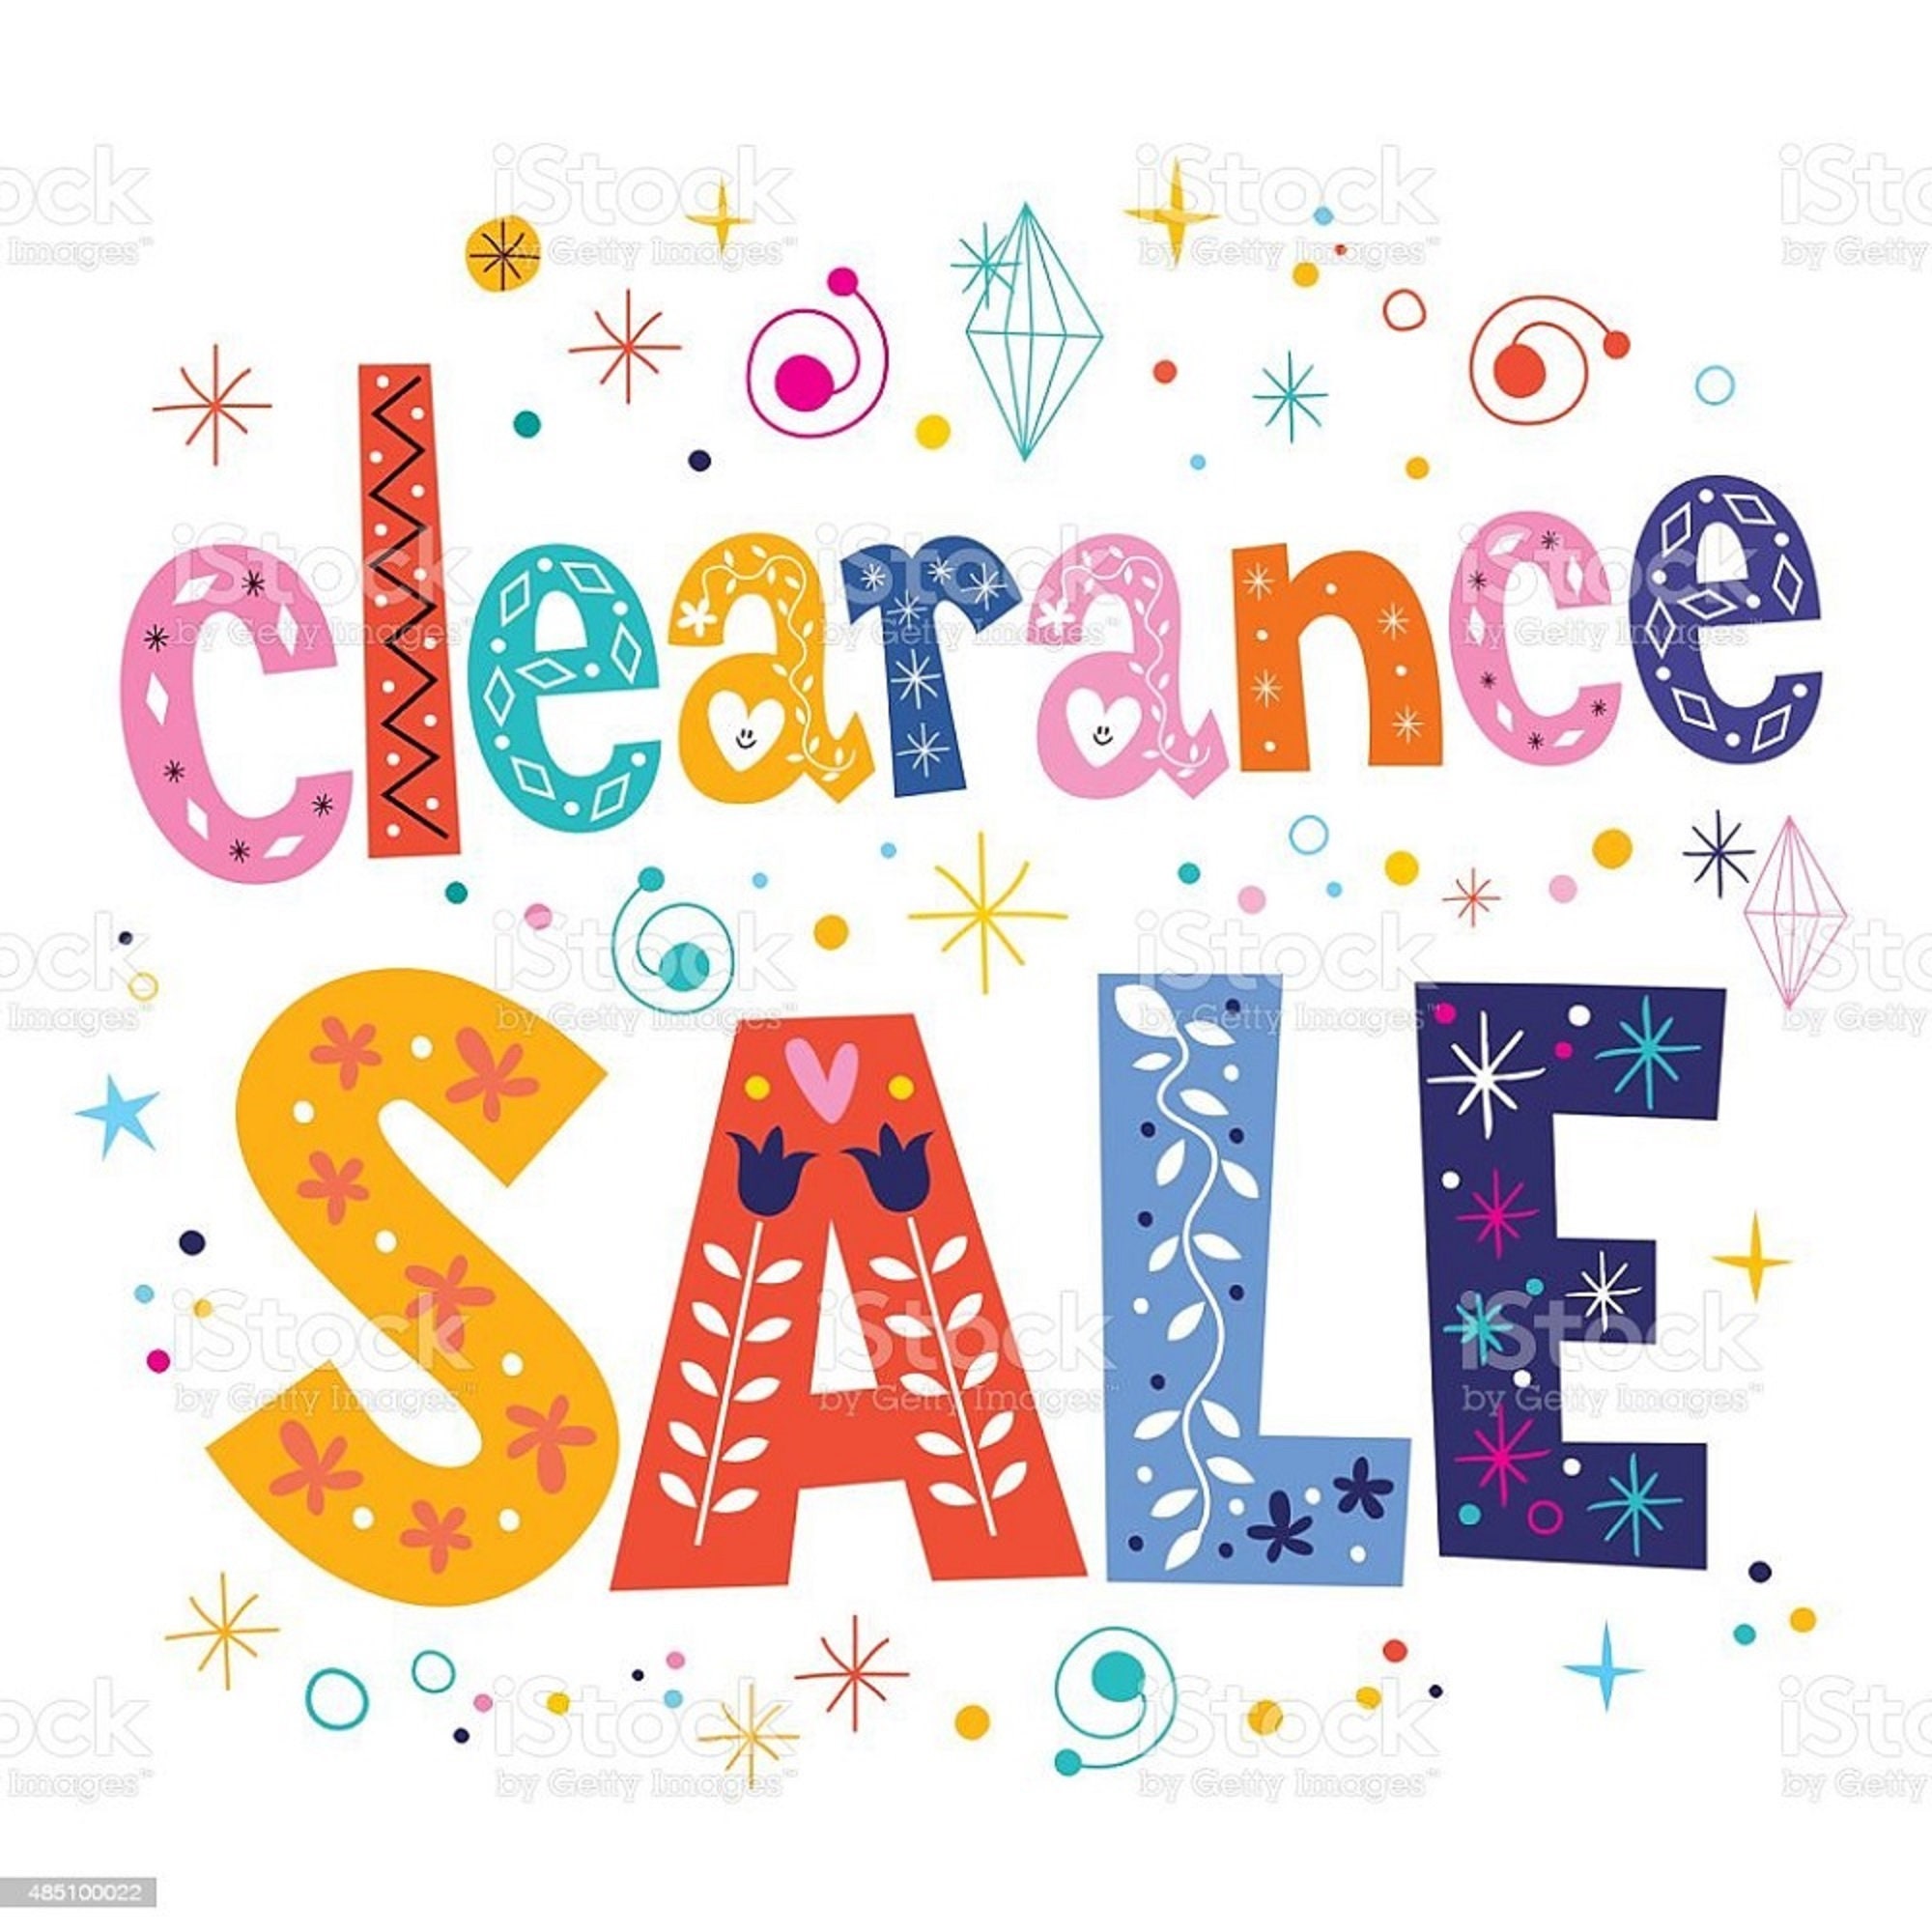 Clearance Sale Sale İtems, Handmade Bracelet, Handmade Pottery